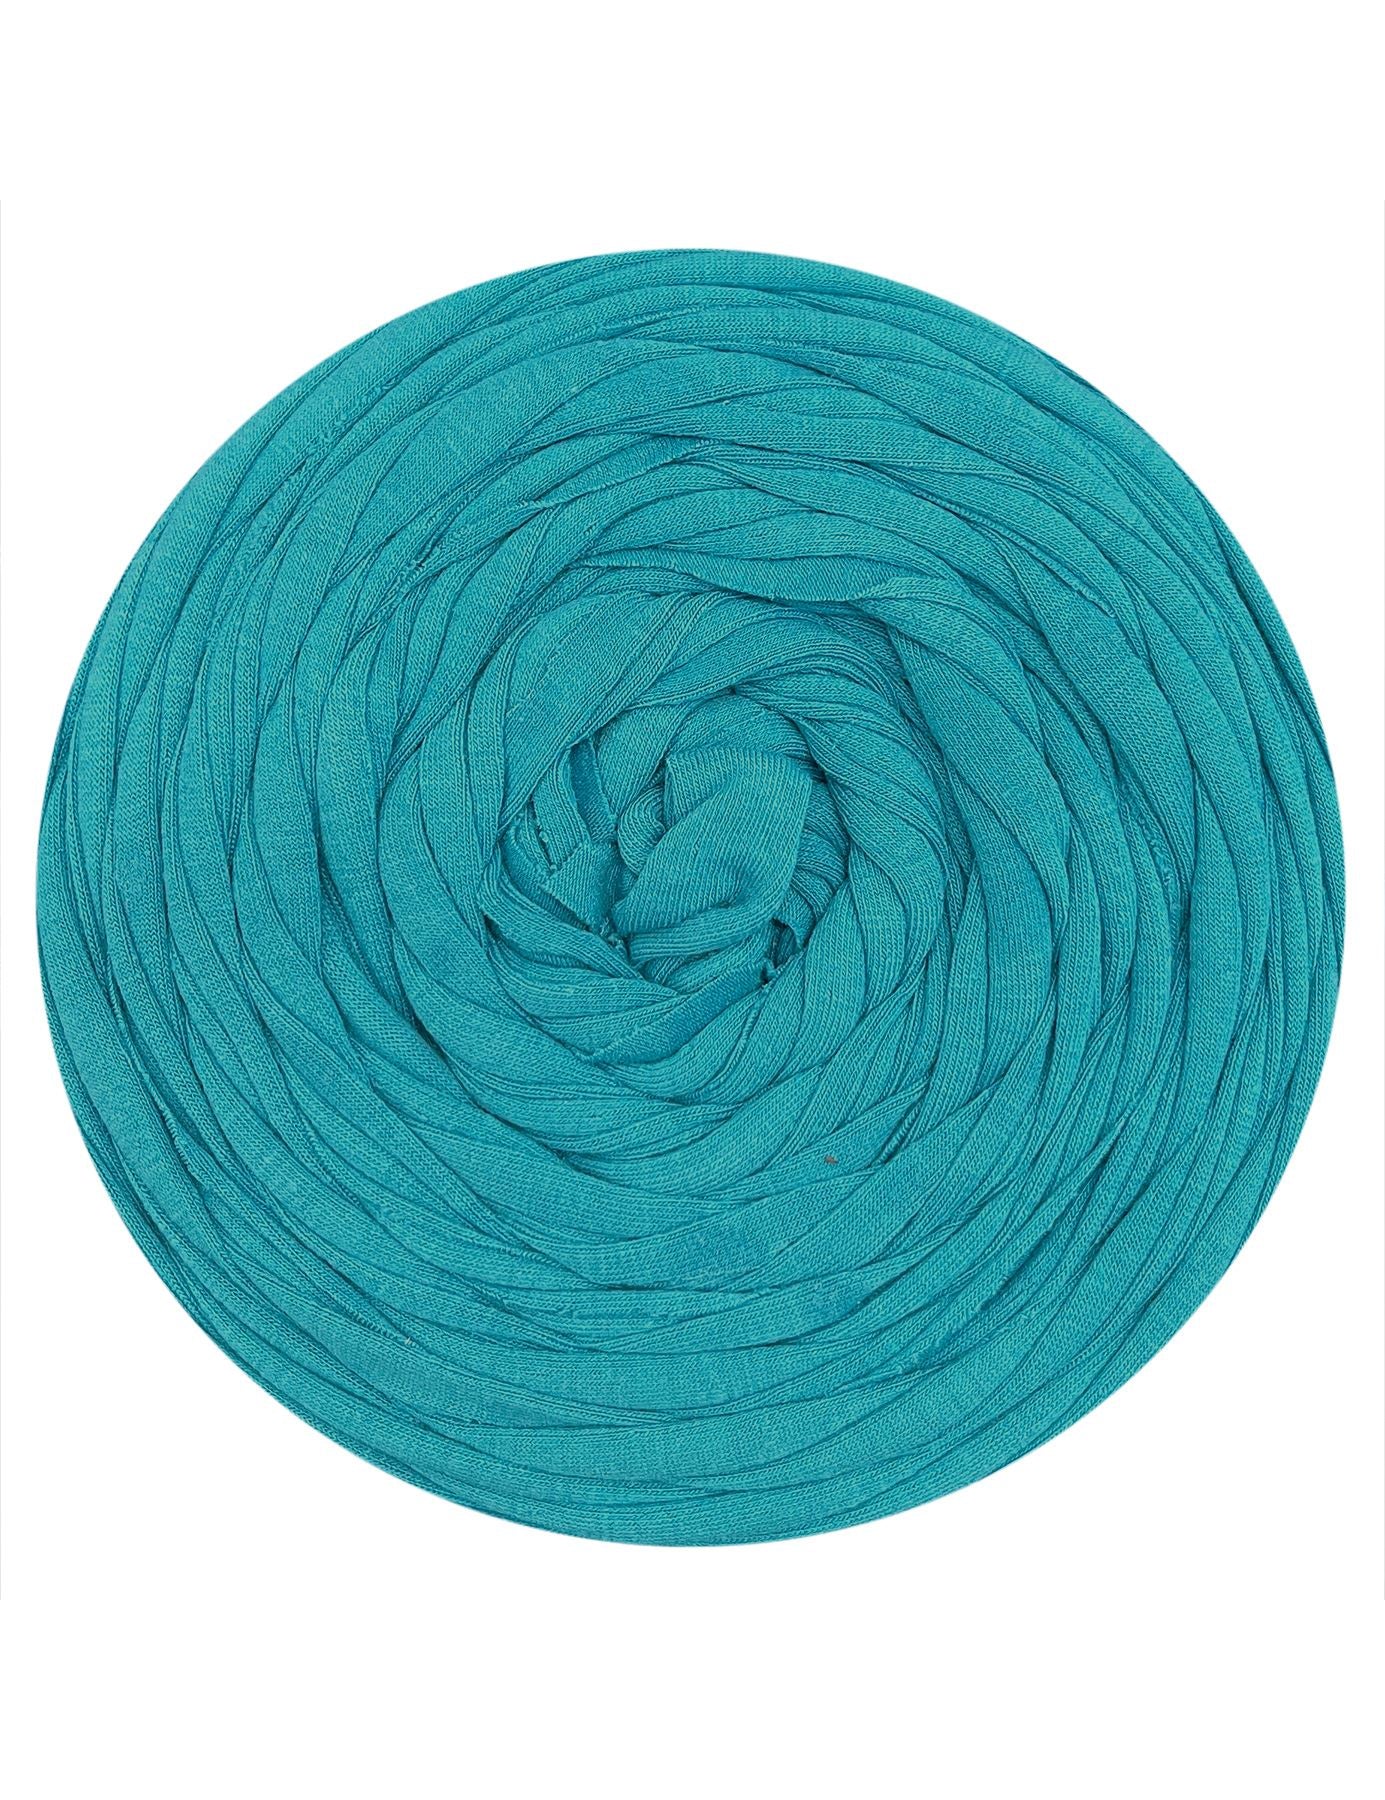 Sapphire blue t-shirt yarn (100-120m)